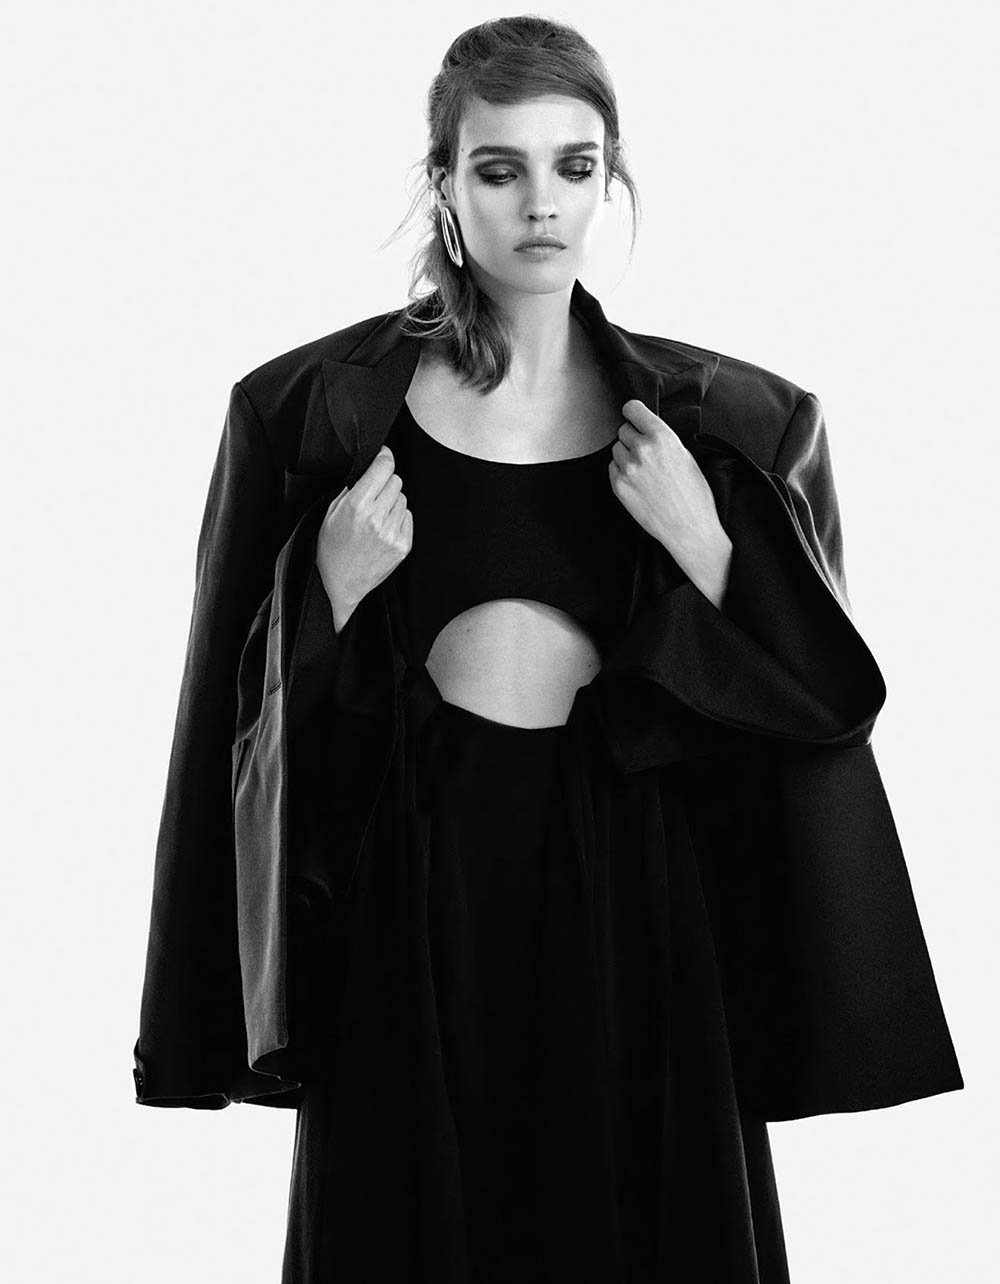 Natalia Vodianova covers Vogue Poland May 2018 by Christian MacDonald